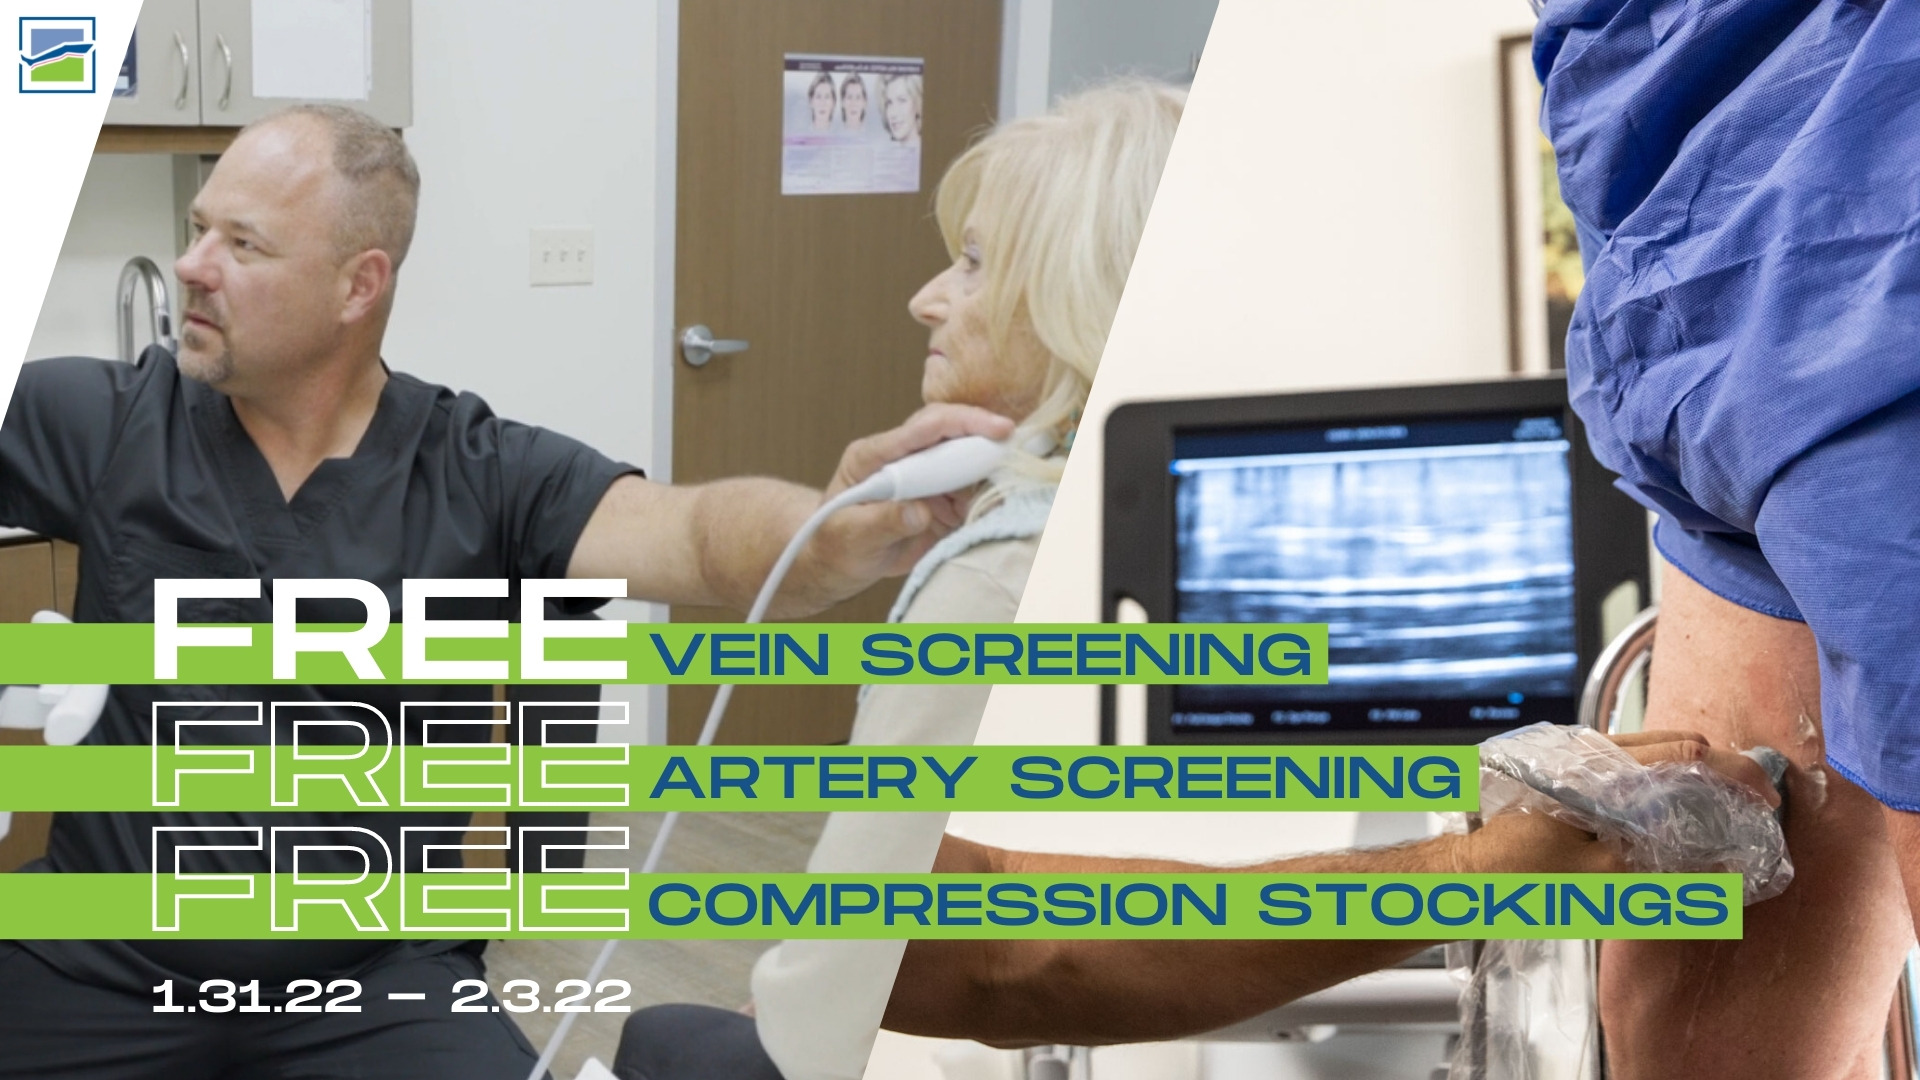 Free Vascular Screening in Rogers